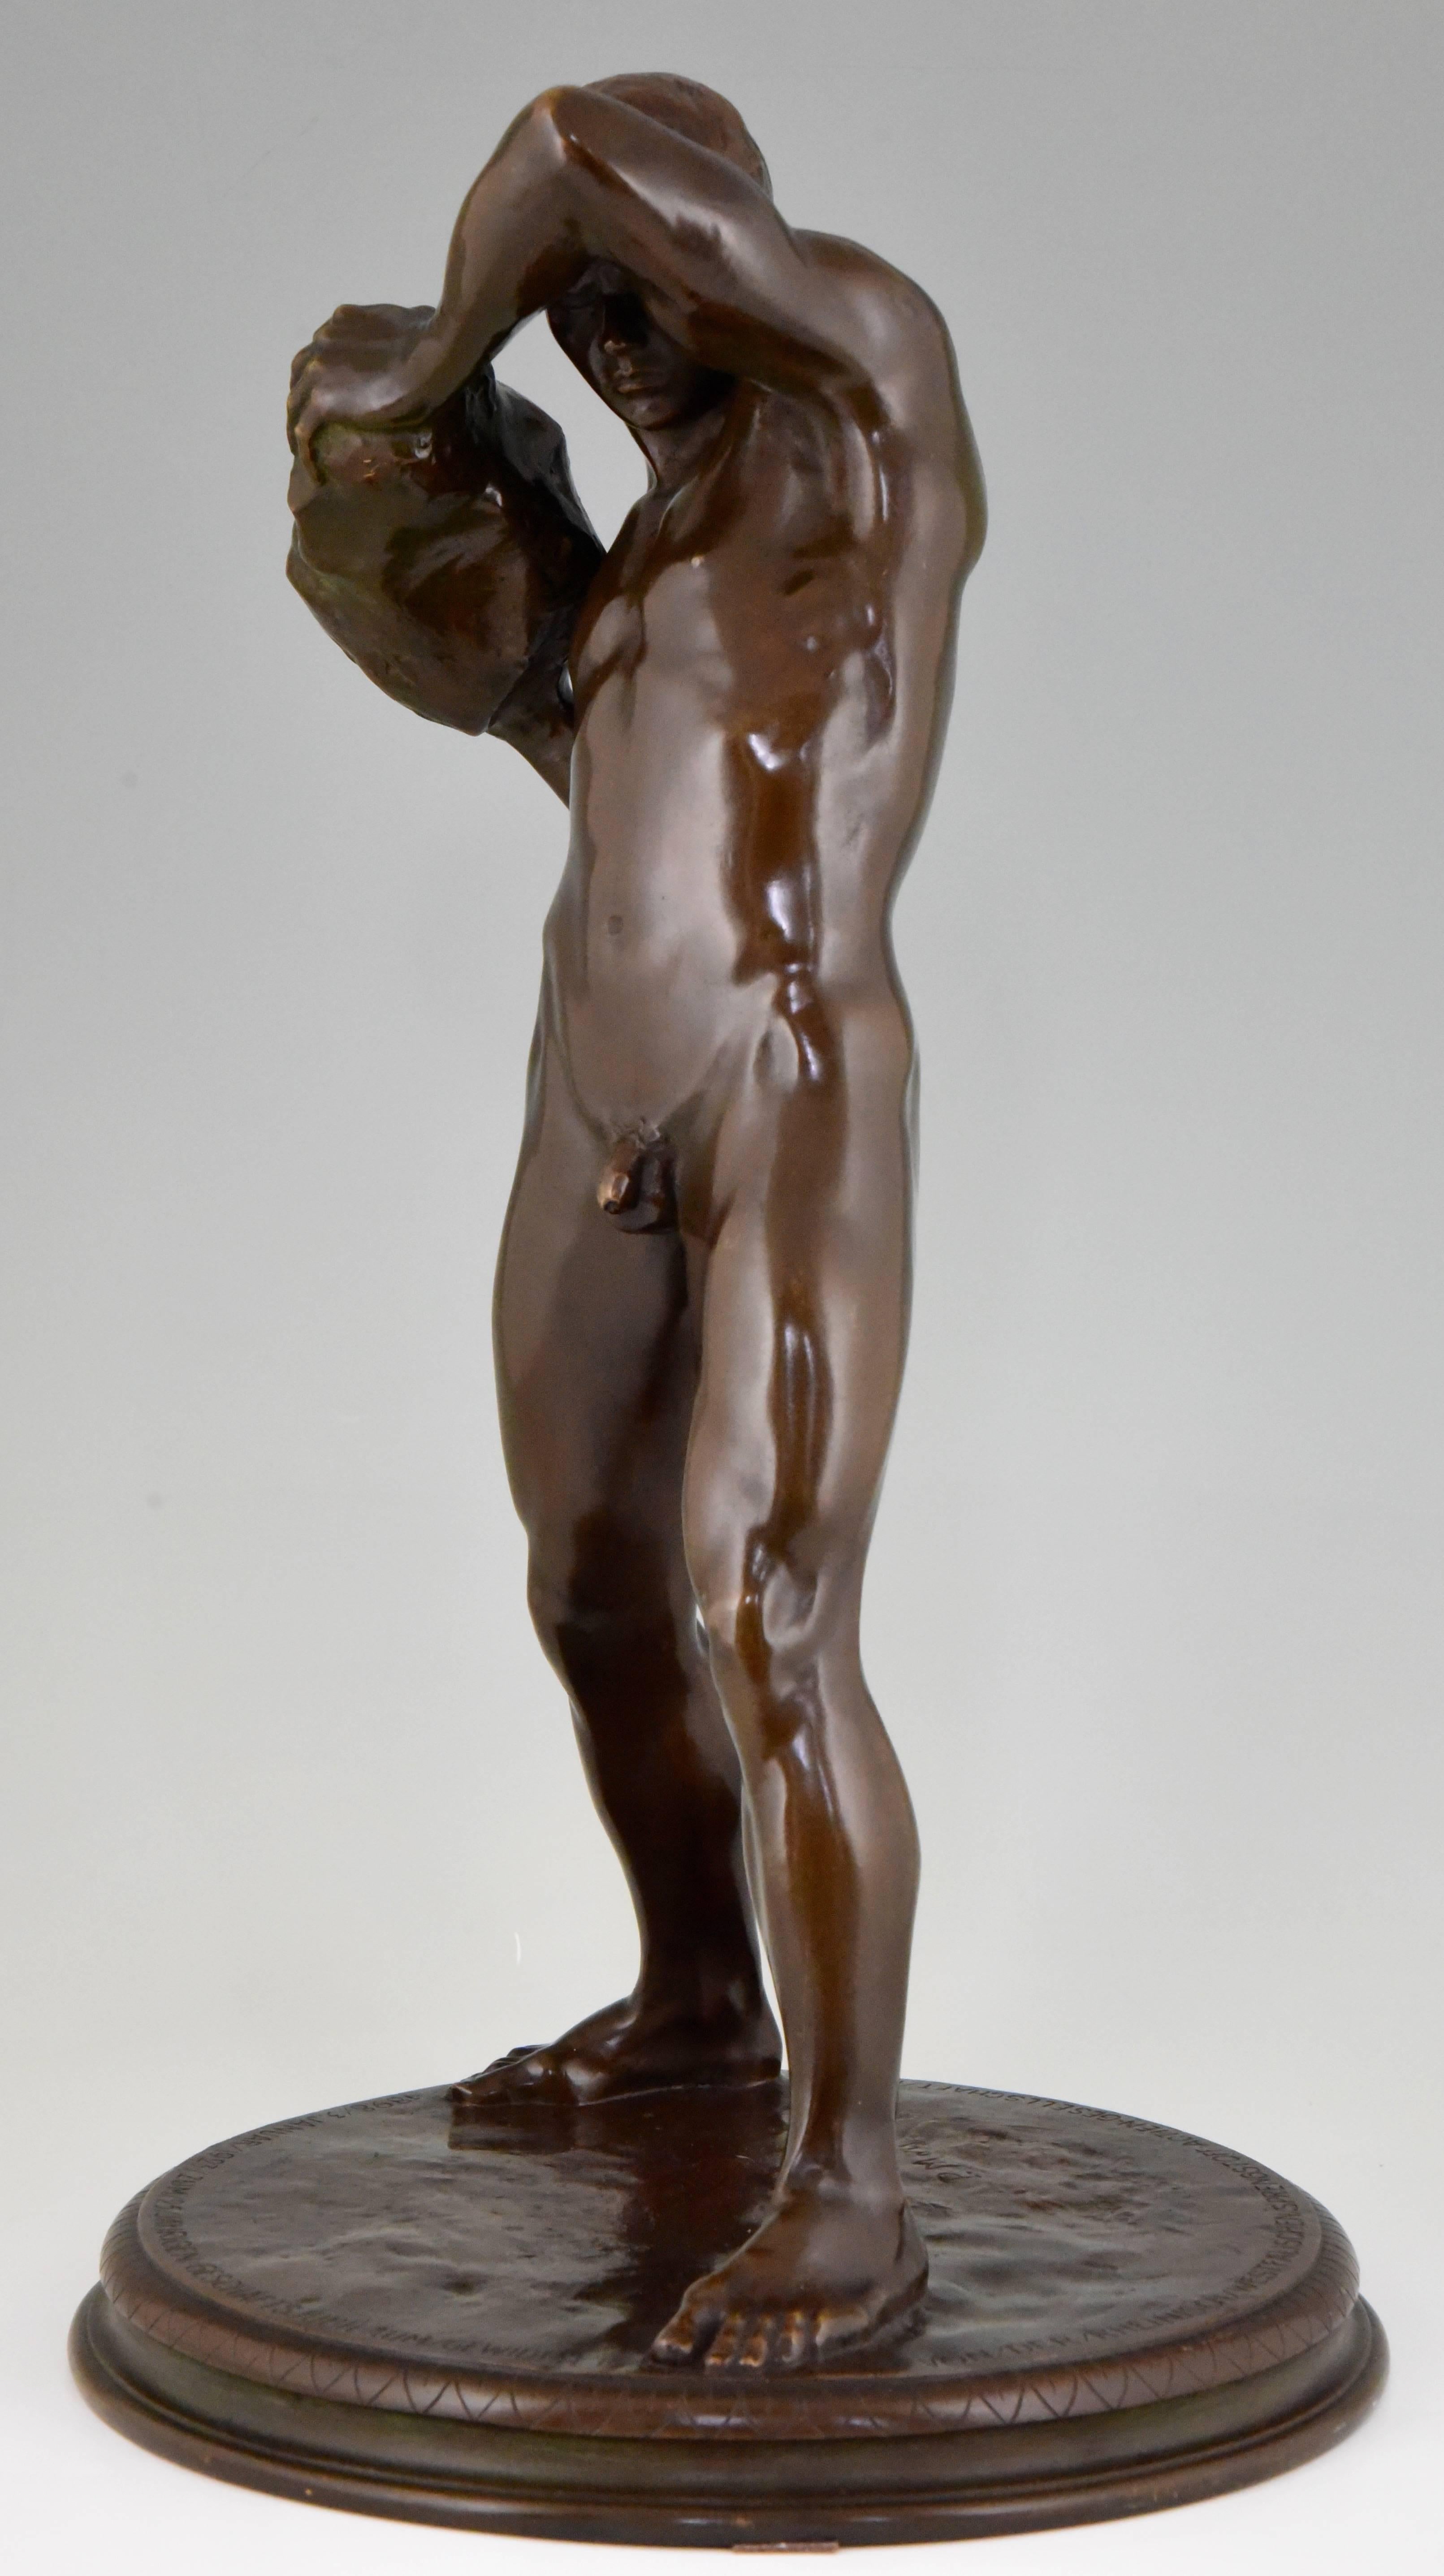 Romantic Antique Bronze Sculpture Male Nude Athlete by Paul Moye, 1923